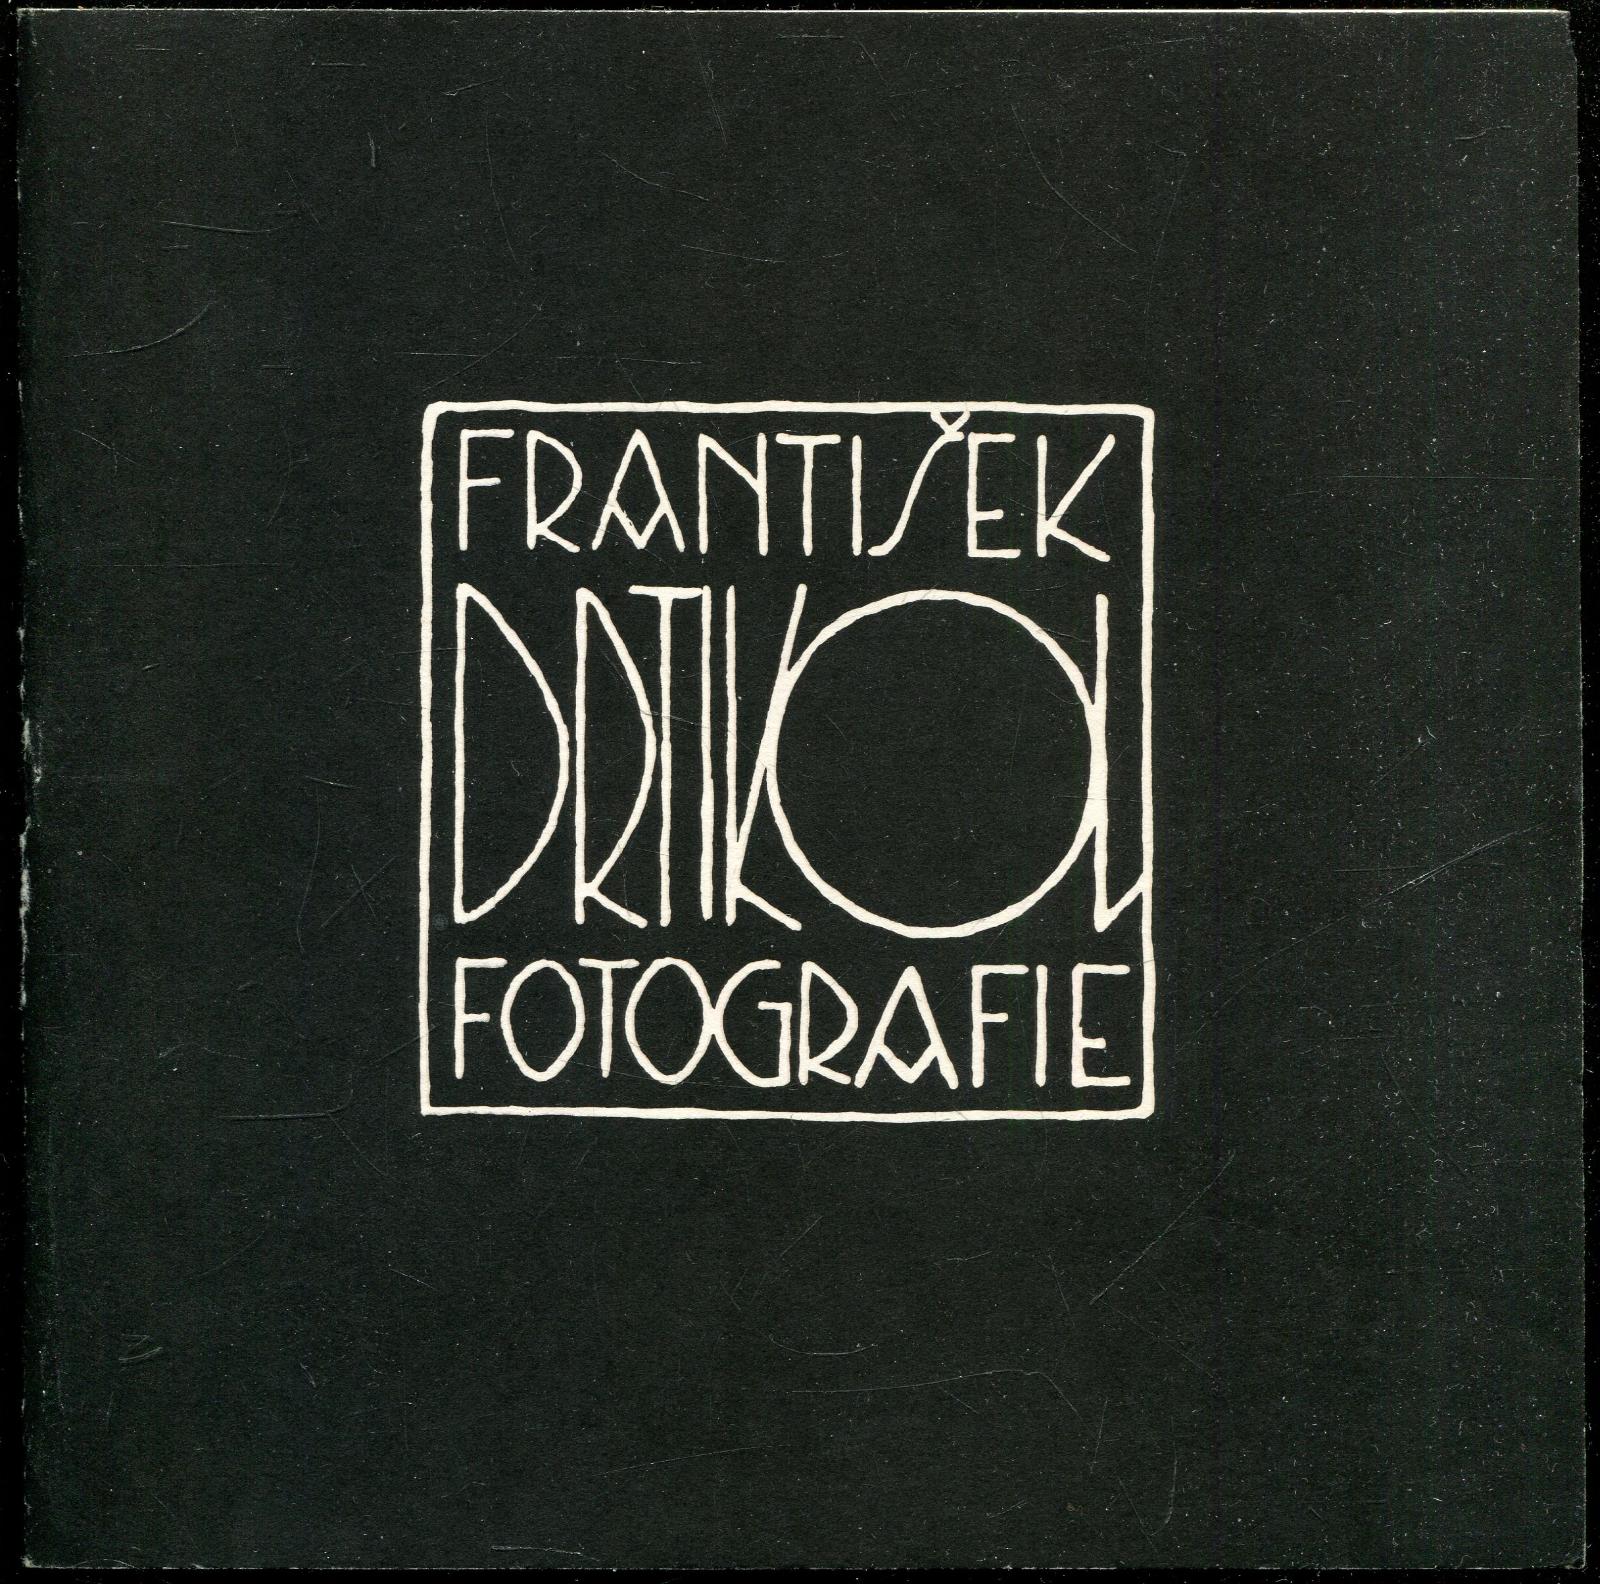 Katalog V Stavy Franti Ek Drtikol Fotografie Aukro